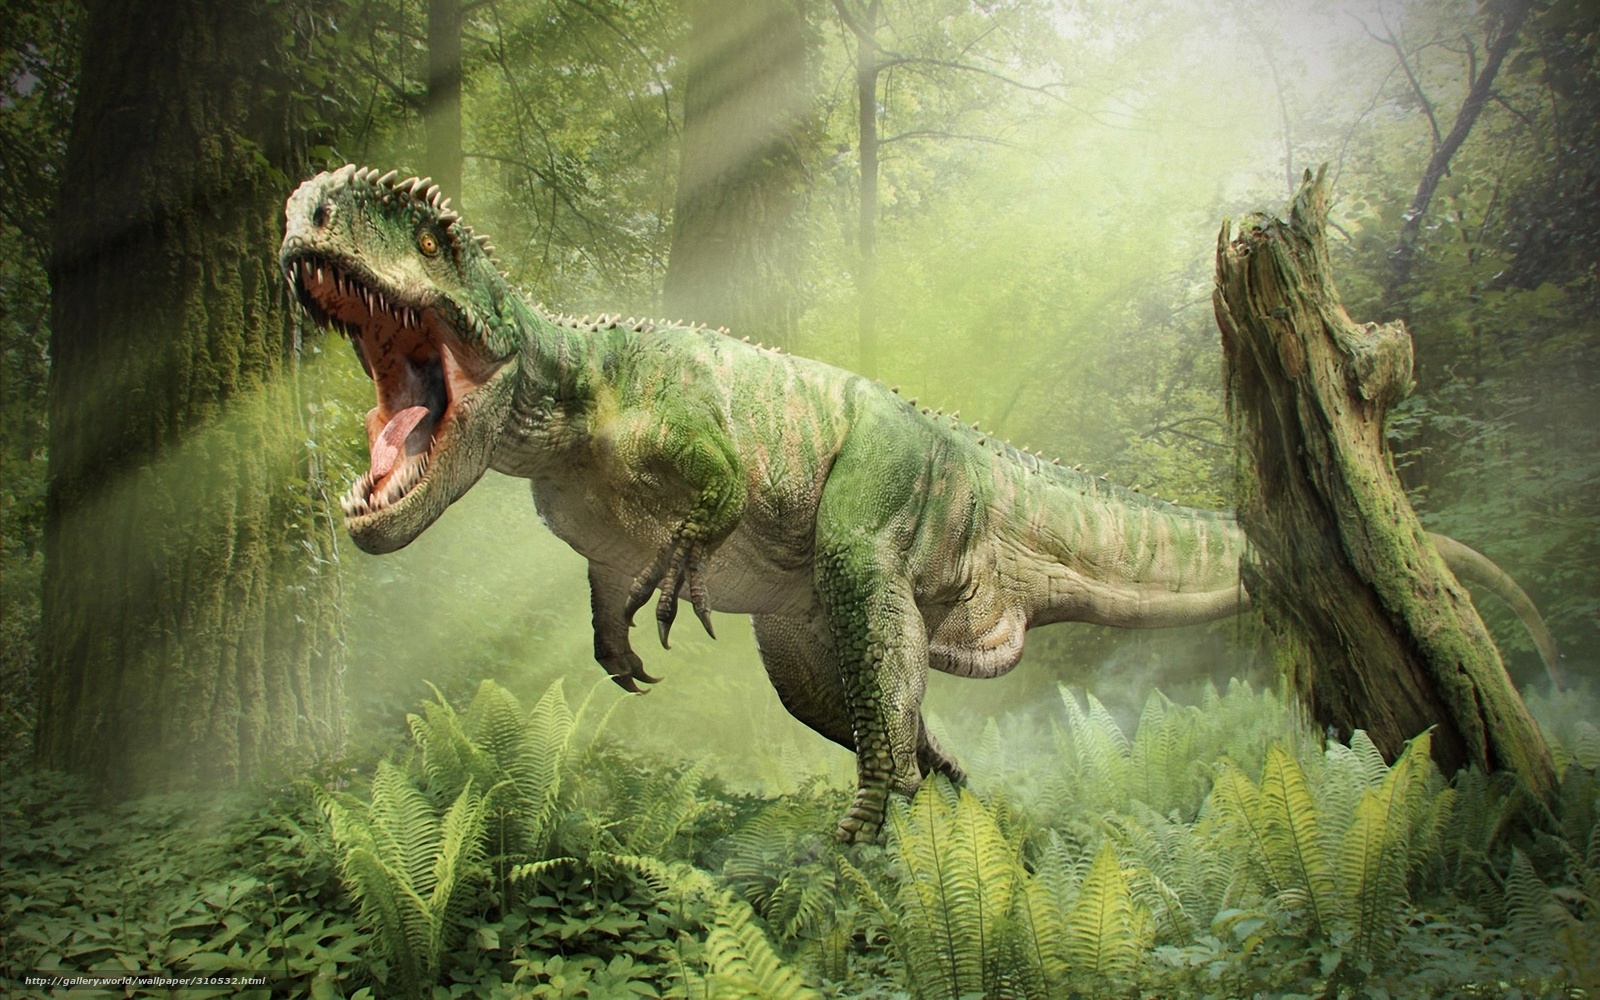 Янхуанозавр